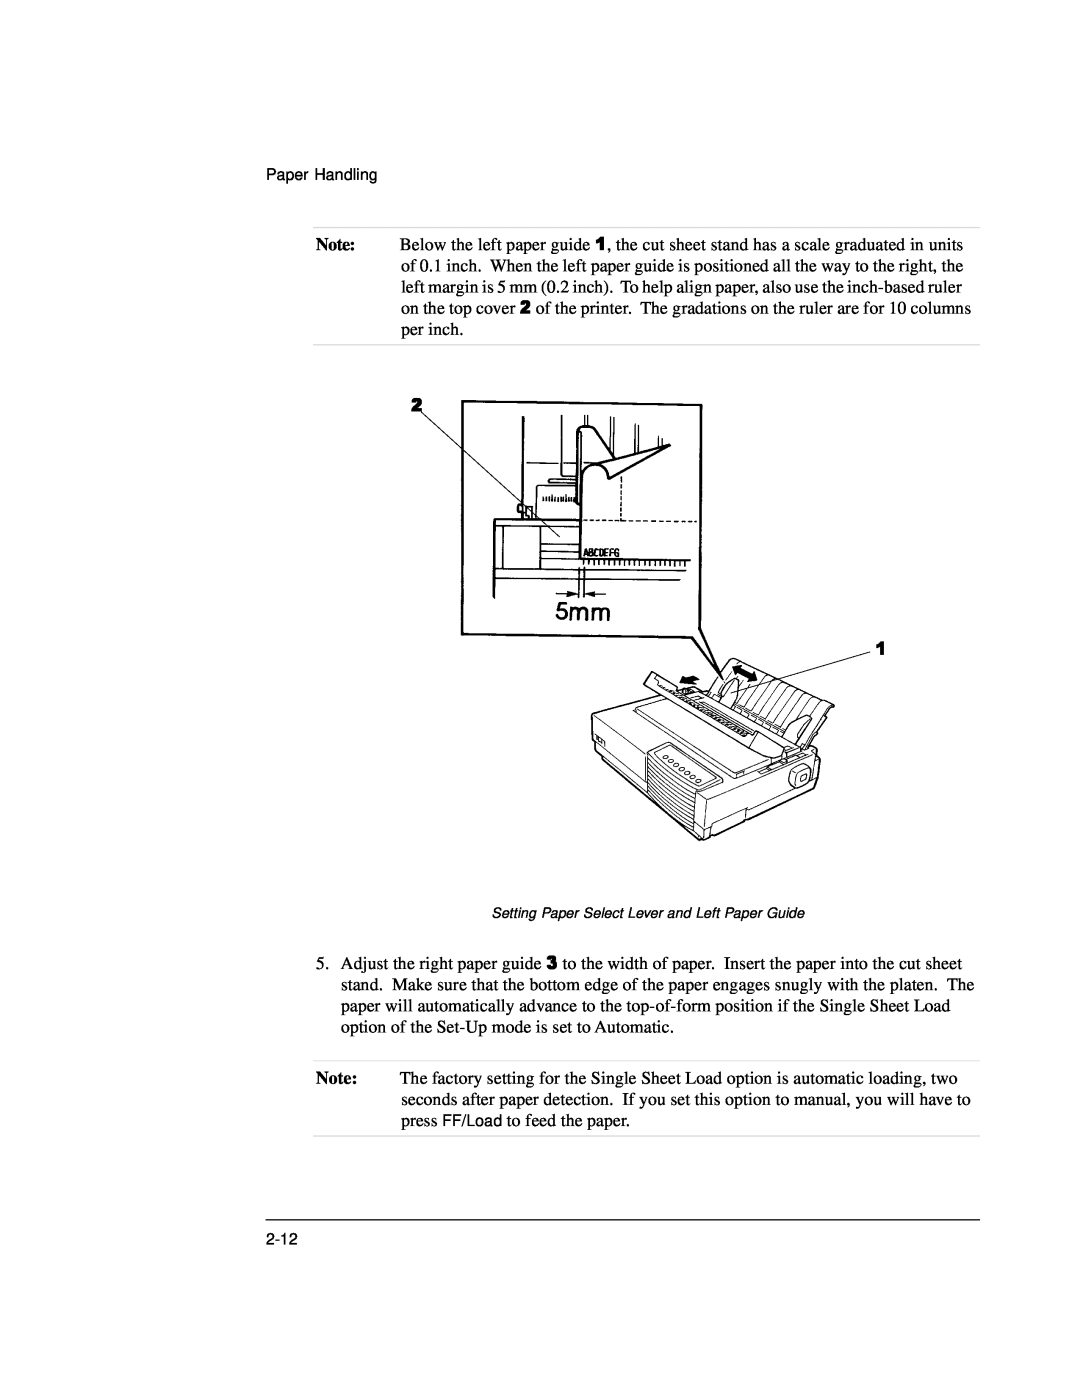 Genicom LA36 manual Setting Paper Select Lever and Left Paper Guide 